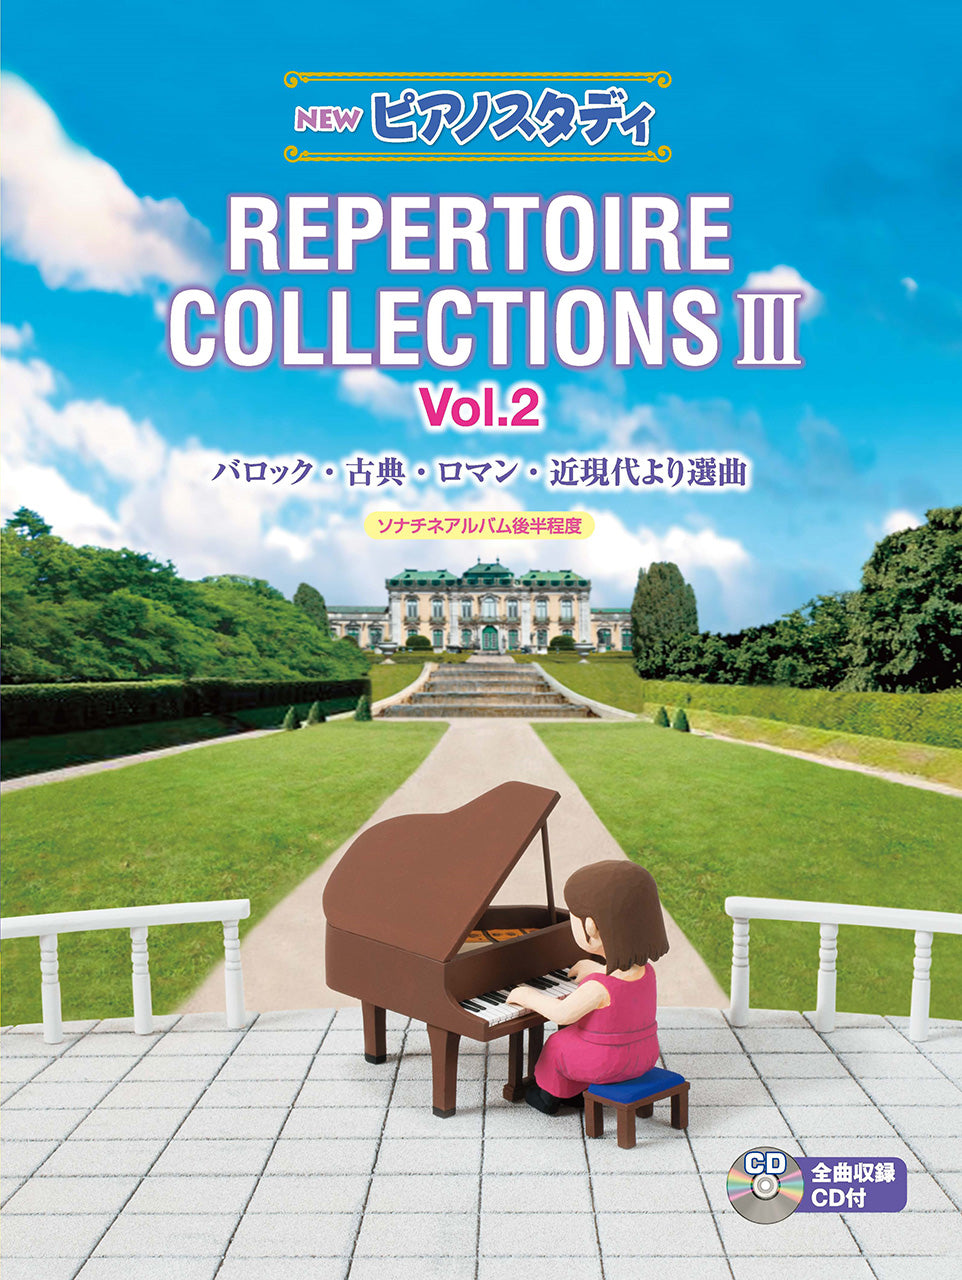 NEW ピアノスタディ レパートリーコレクションズIII Vol.2(CD付)